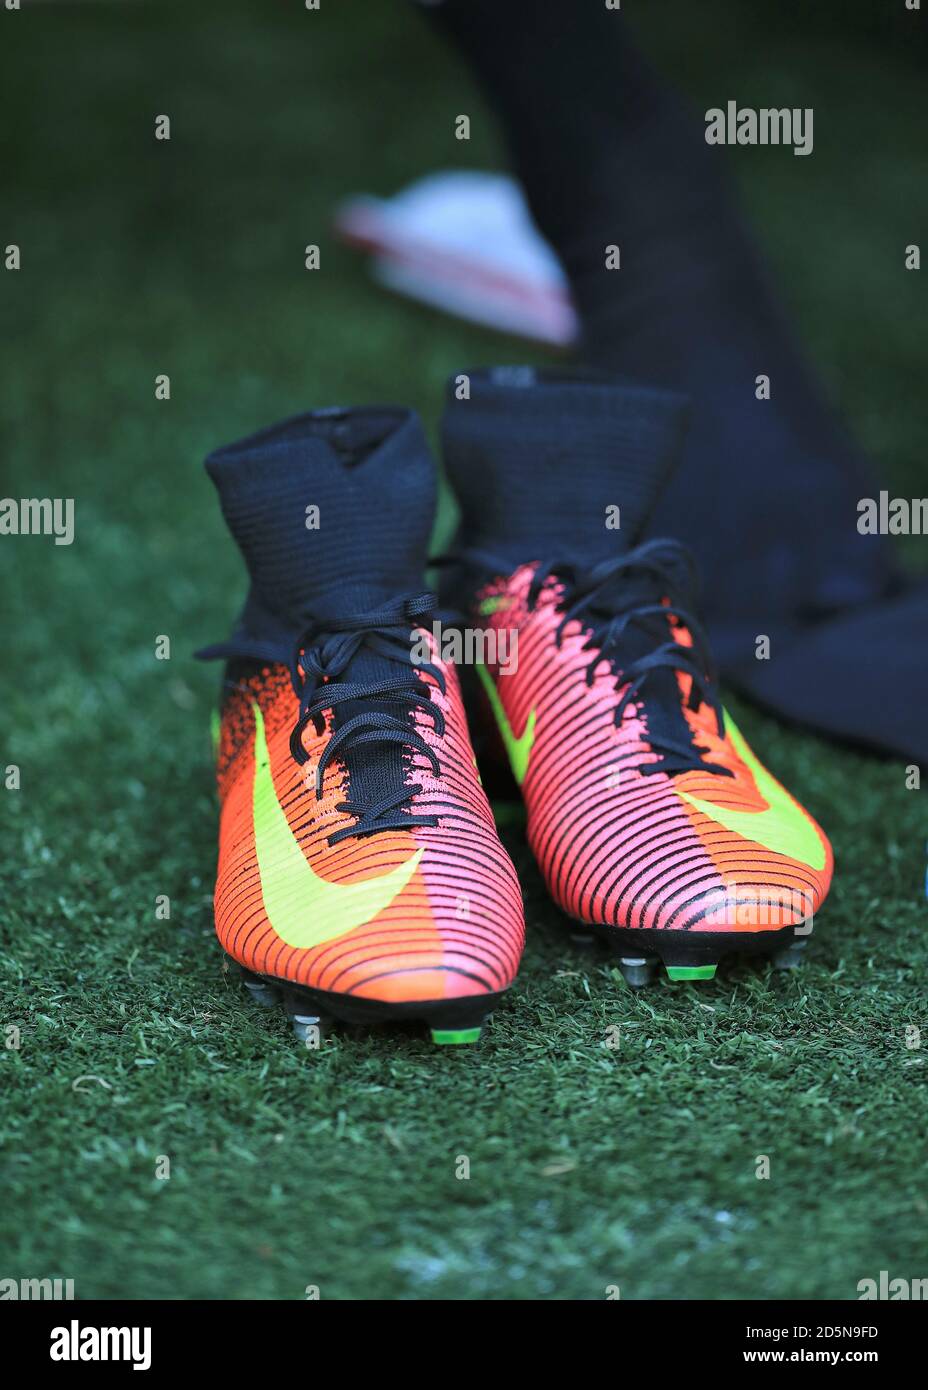 A pair of orange Nike football boots Stock Photo - Alamy